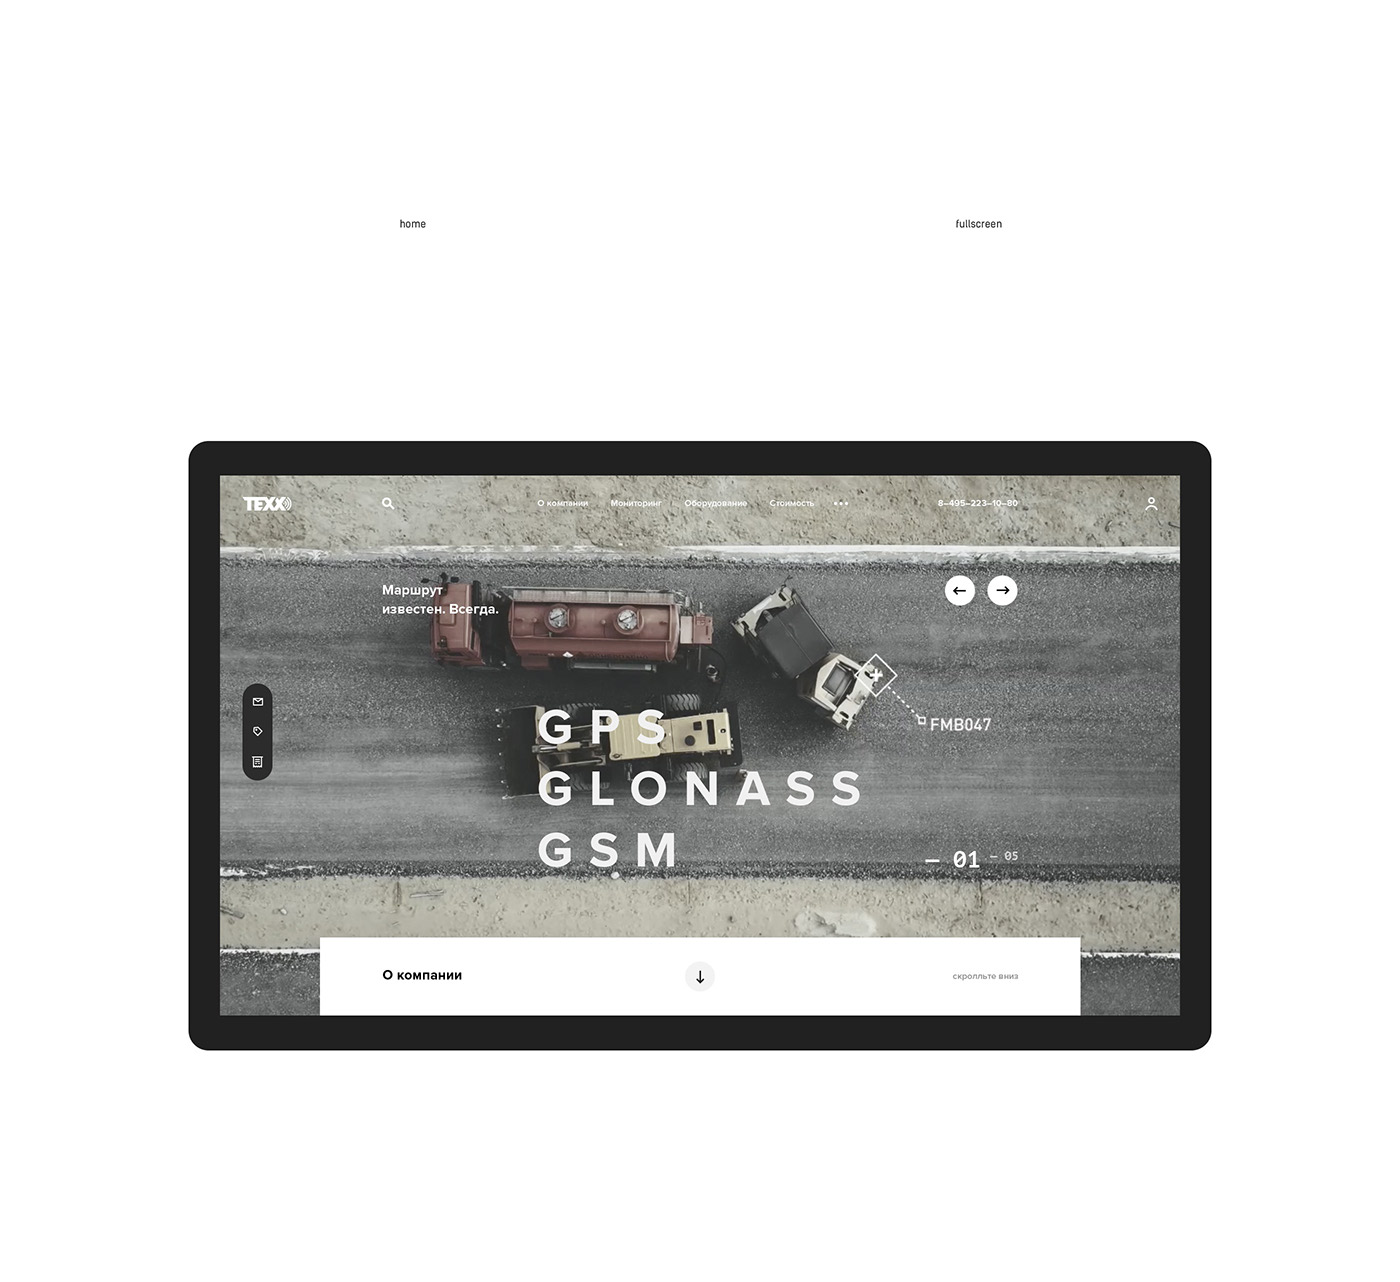 gps glonass fullscreen Web site promo tracking